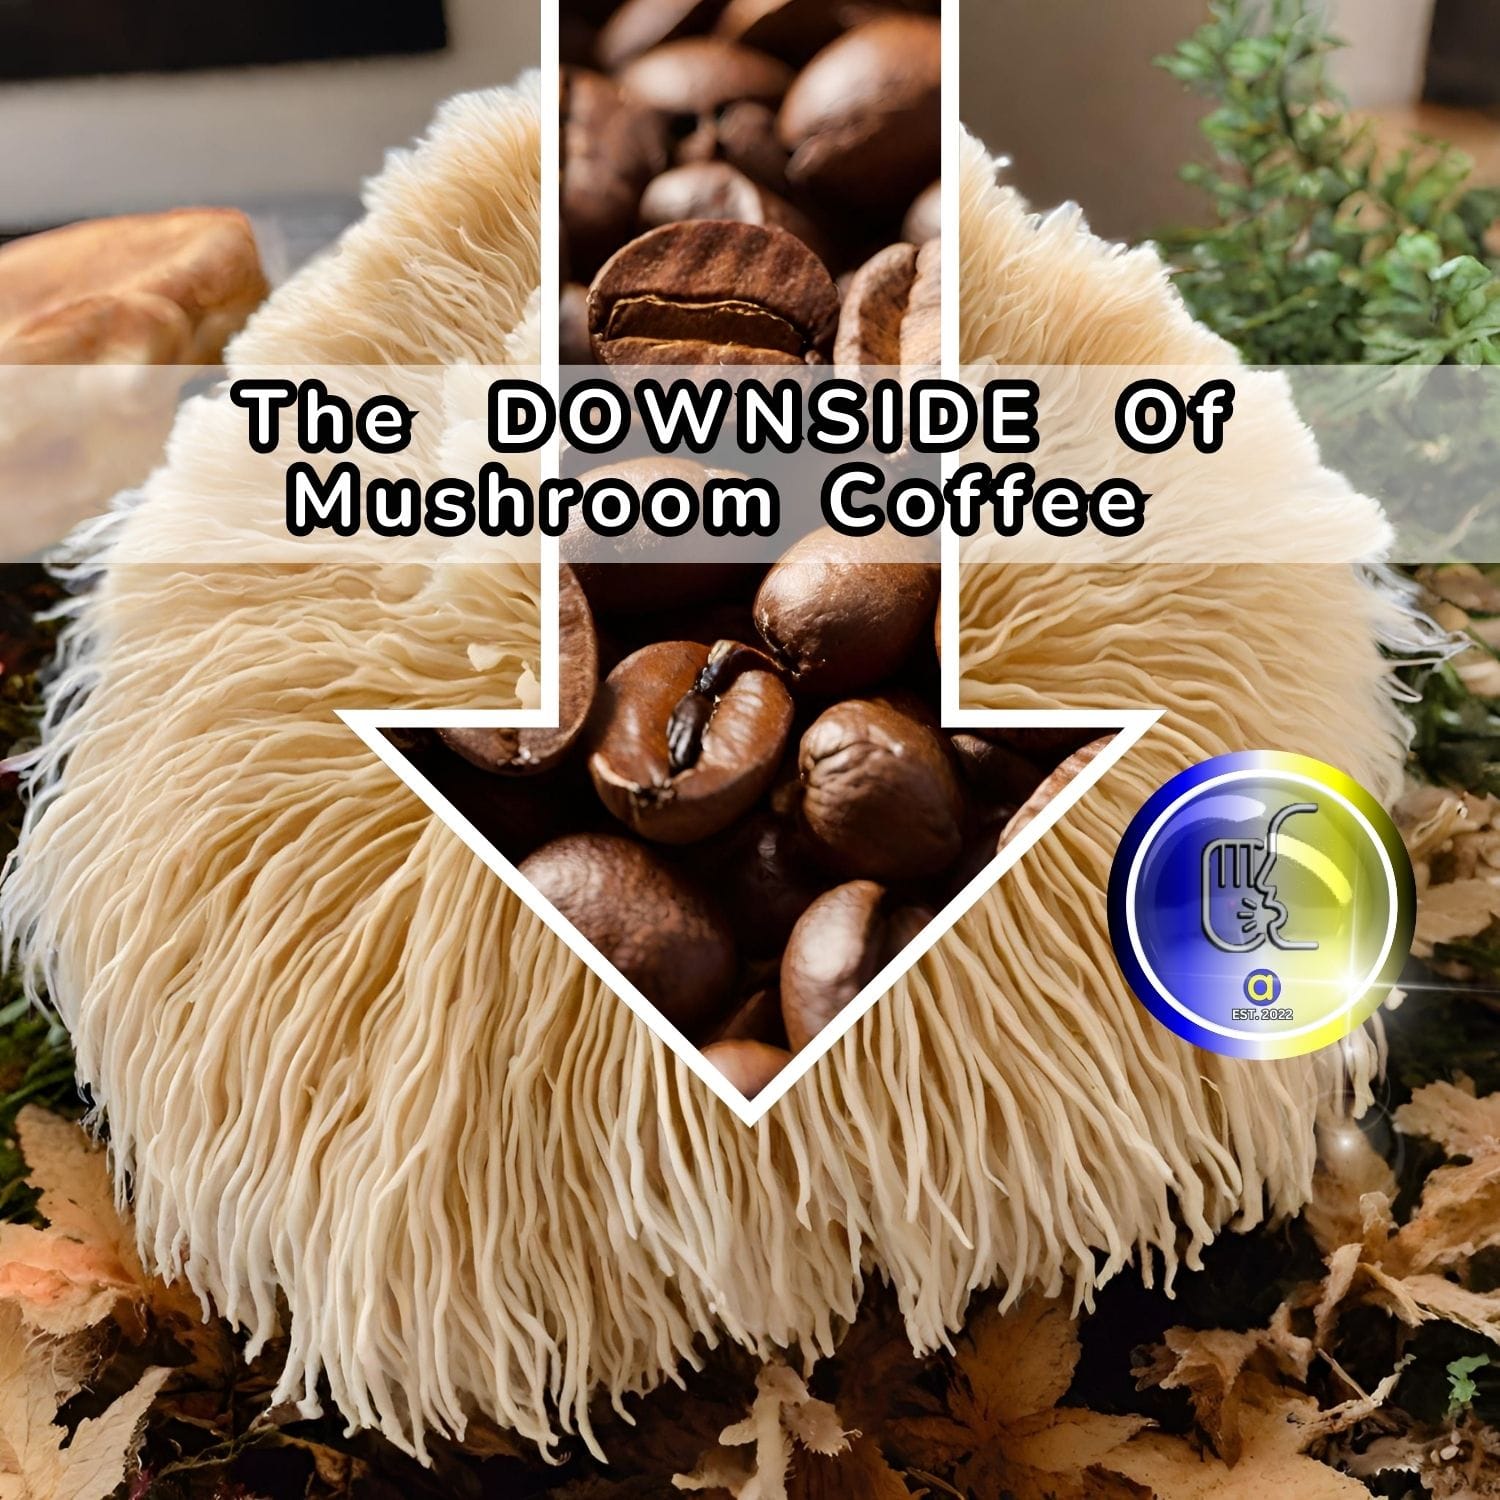 What is the Downside of Mushroom Coffee